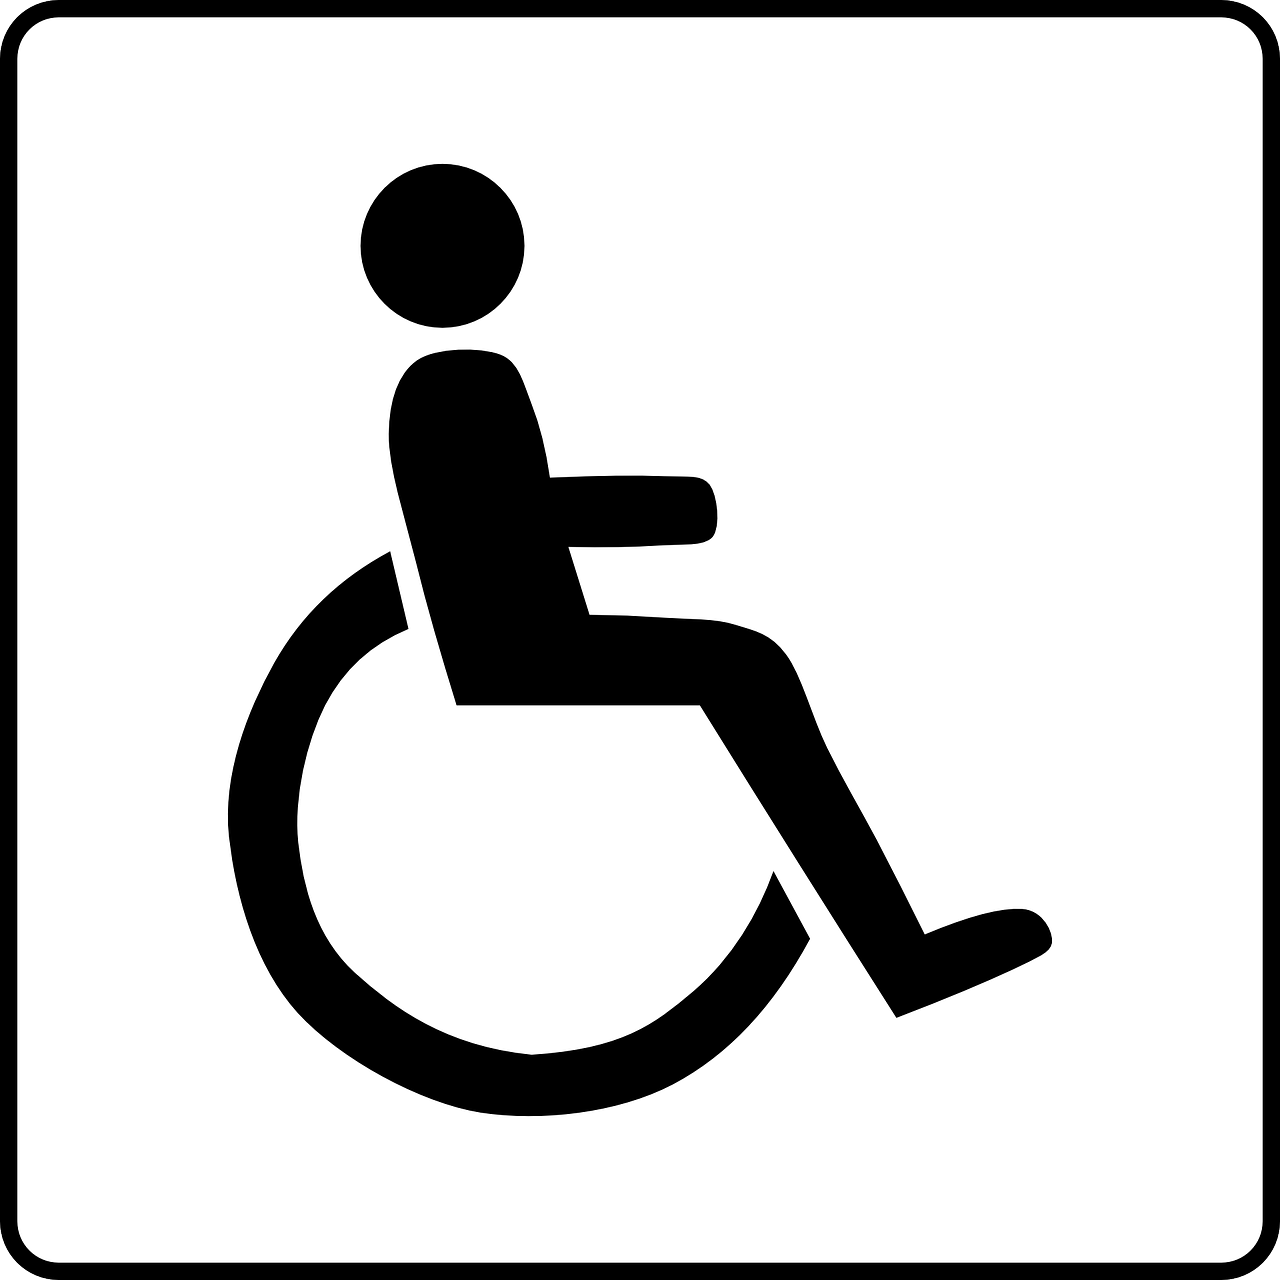 HBKH Entrepreneur ervaring instelling gehandicaptenzorg verstandelijk gehandicapten